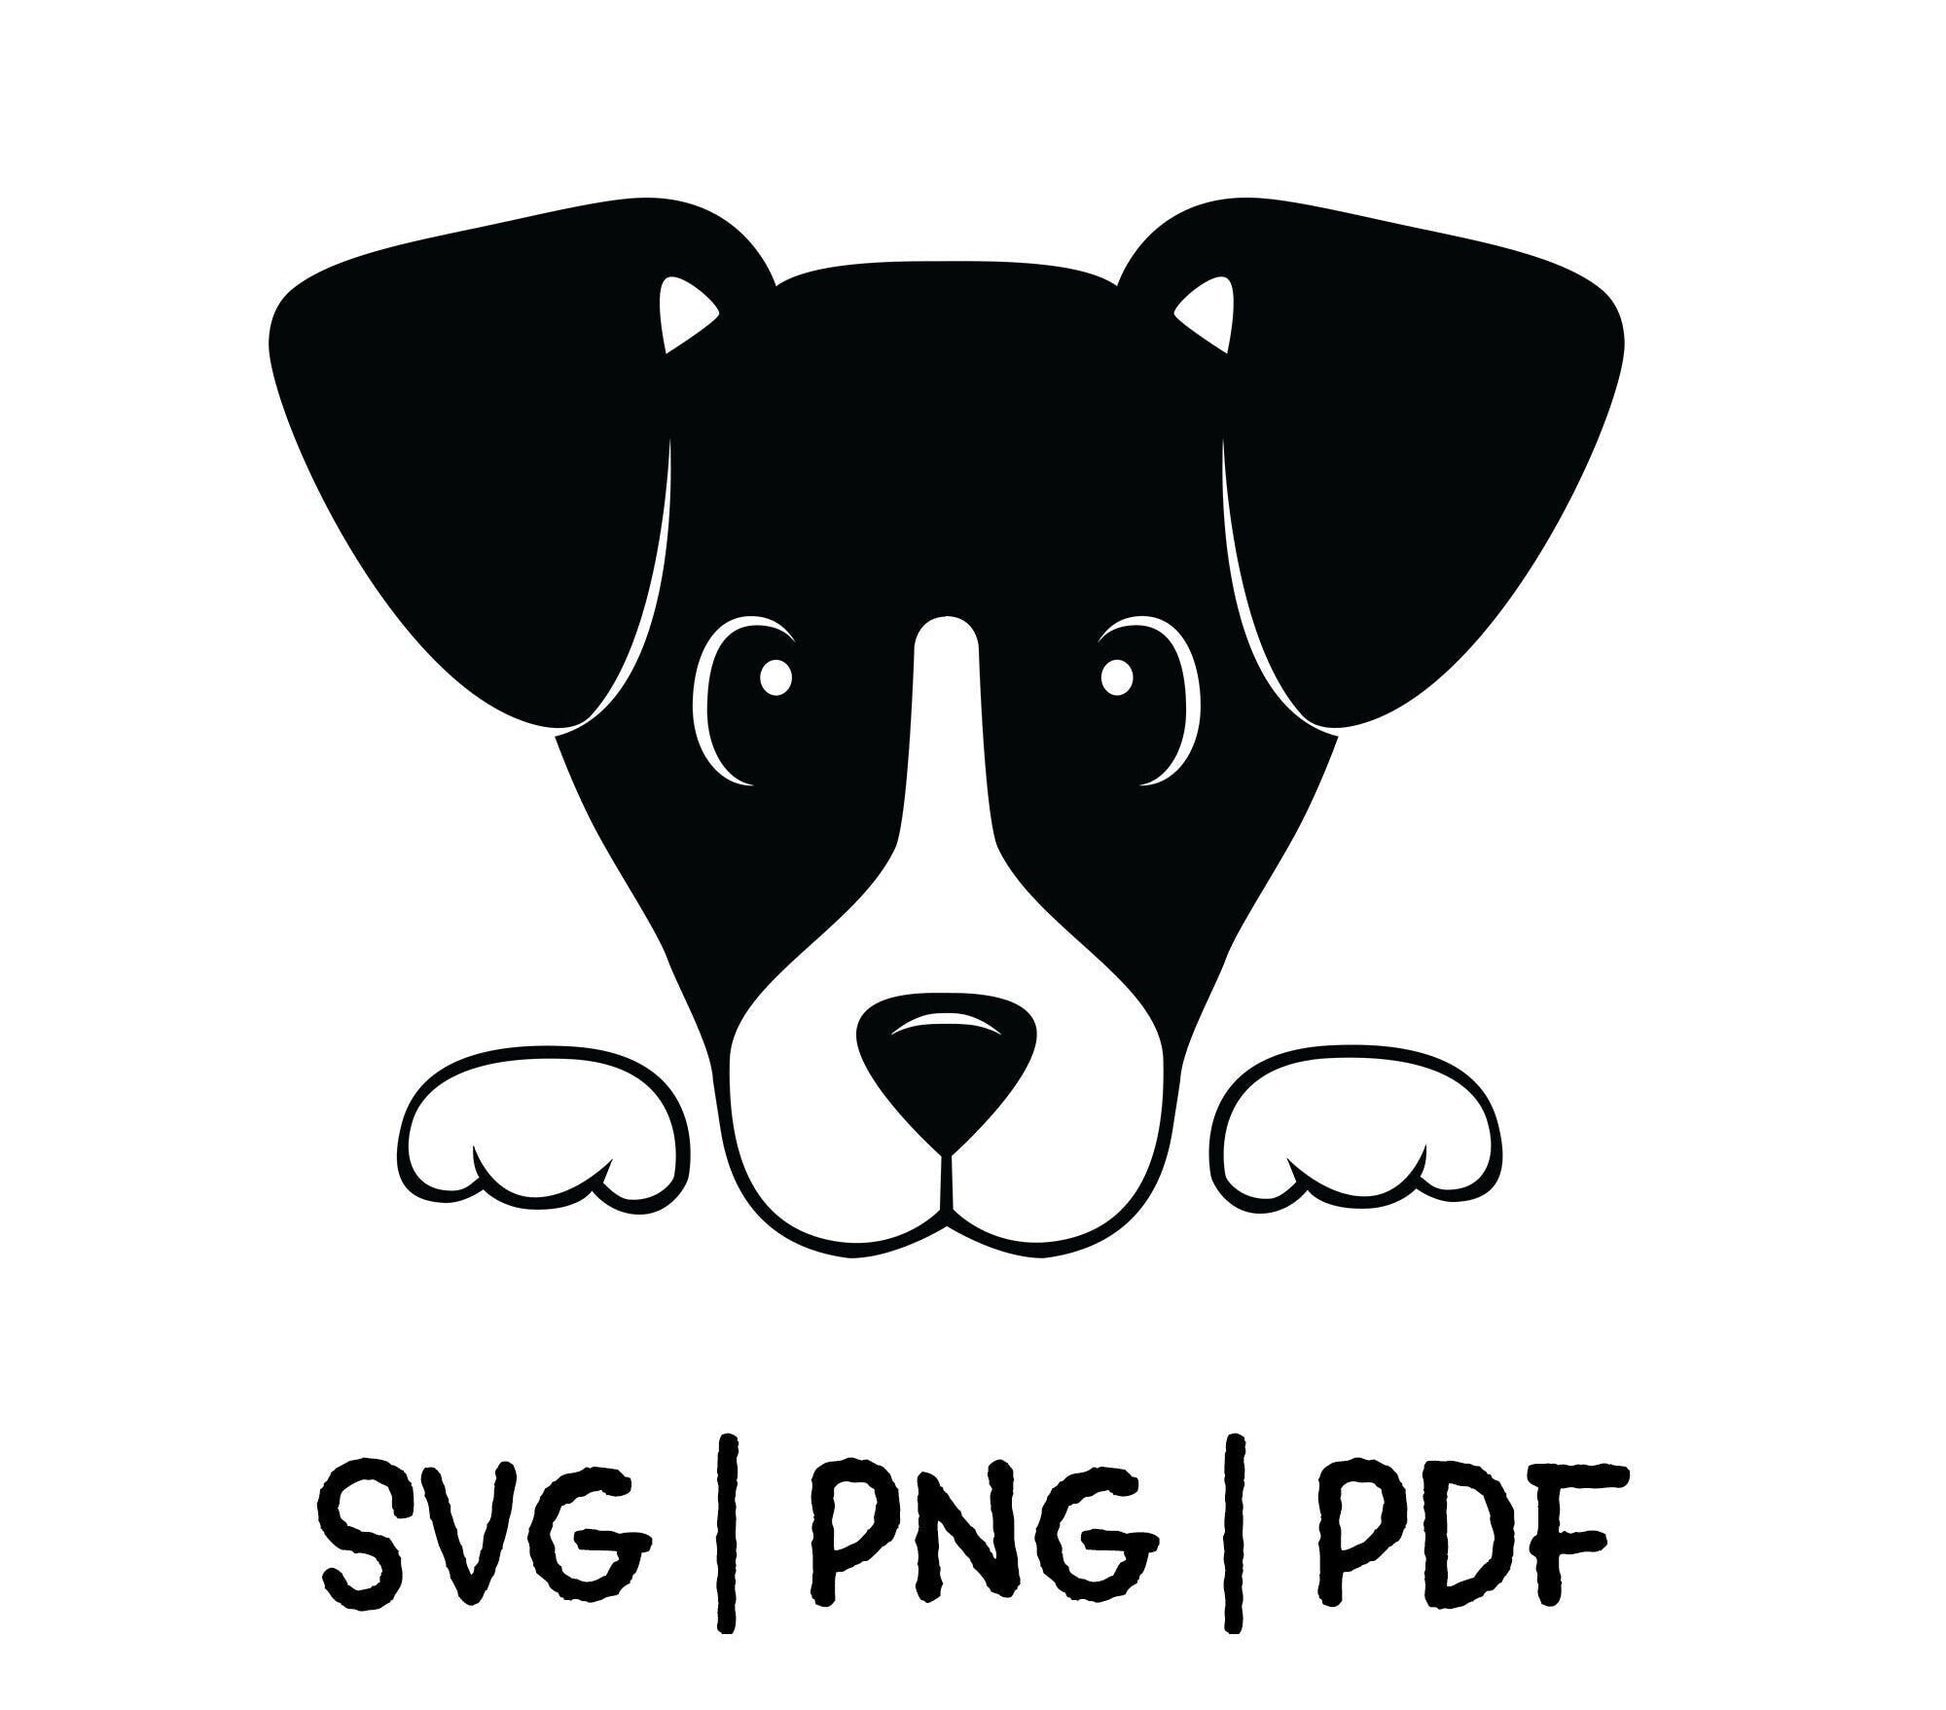 Jack Russell SVG PNG PDF Cut File, Cute Dog Peeking Over, Cutting File, Cricut, Silhouette, SVG Cut Files,